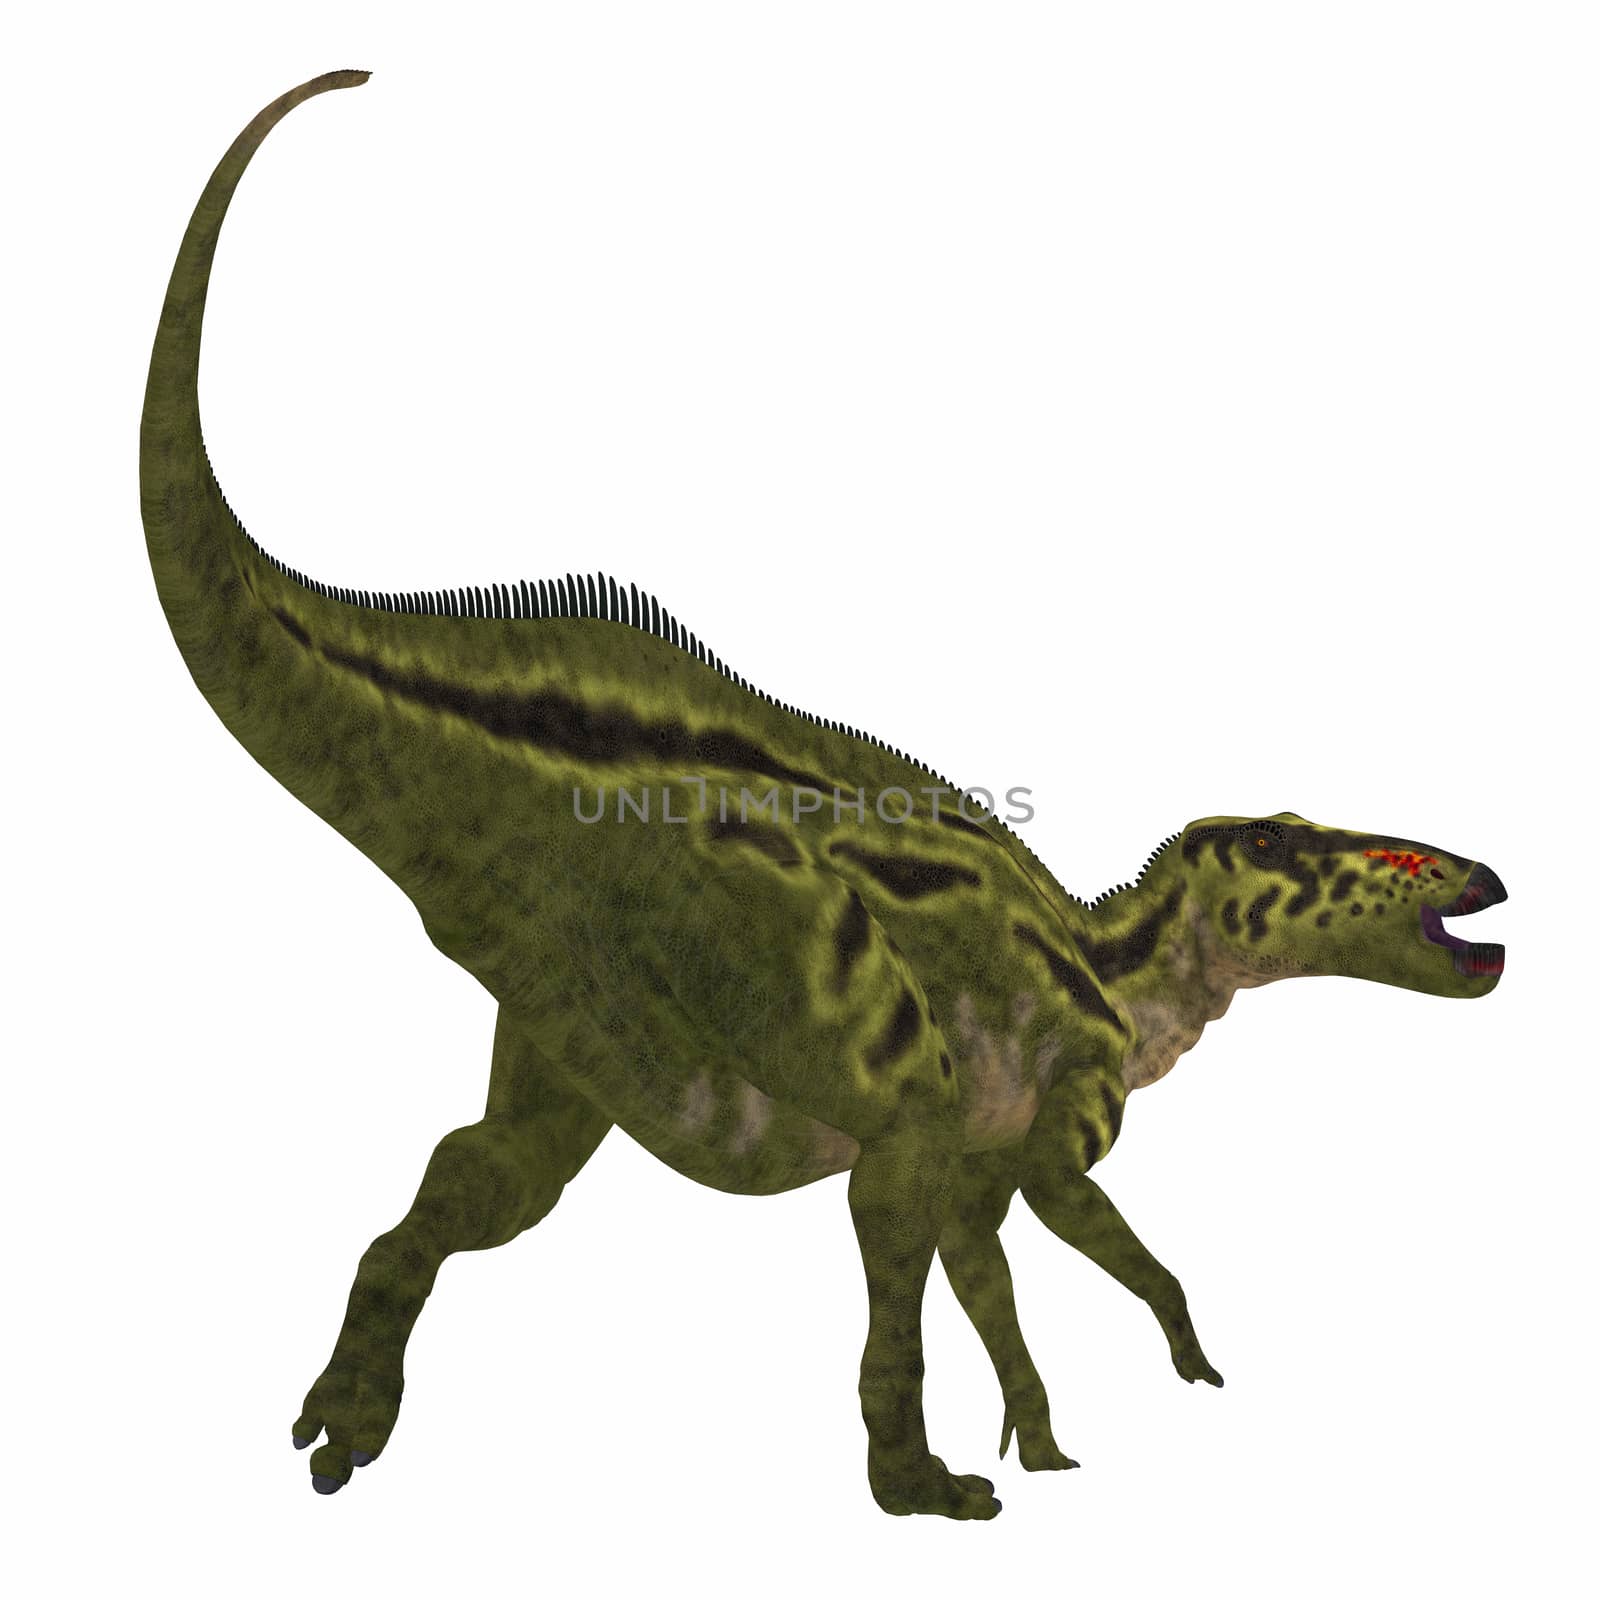 Shantungosaurus Dinosaur Tail by Catmando